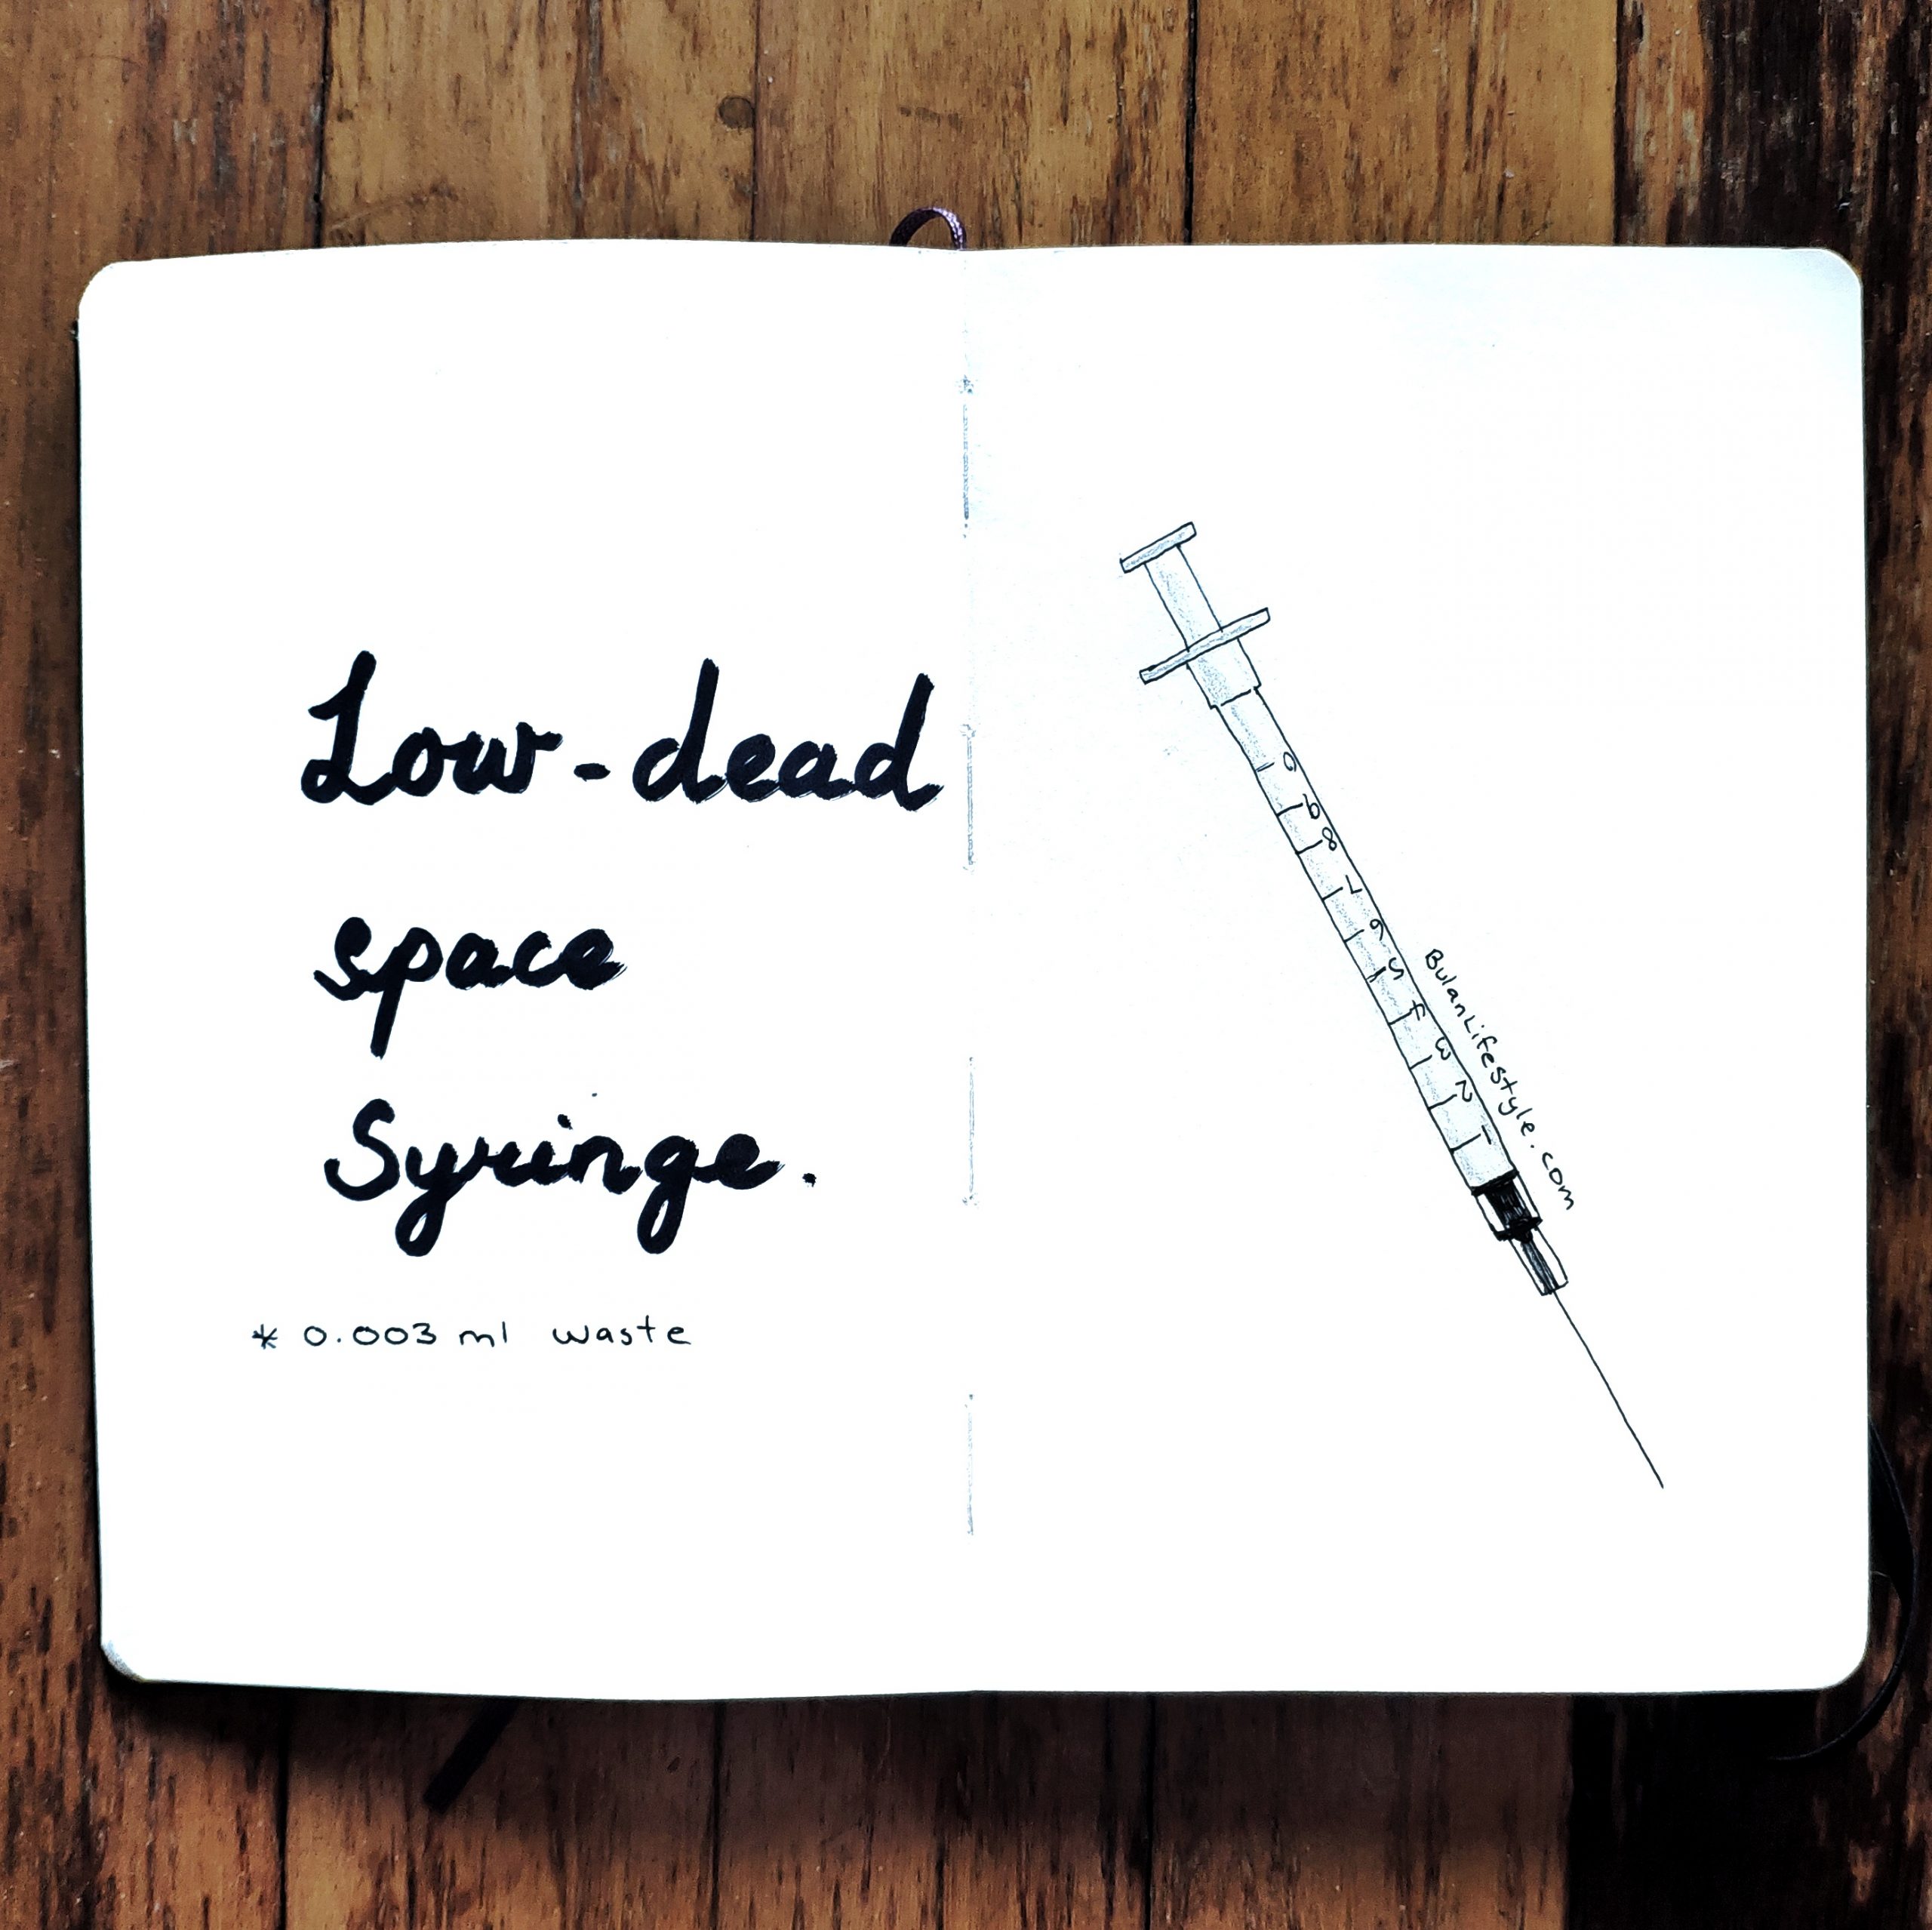 Low dead space syringe